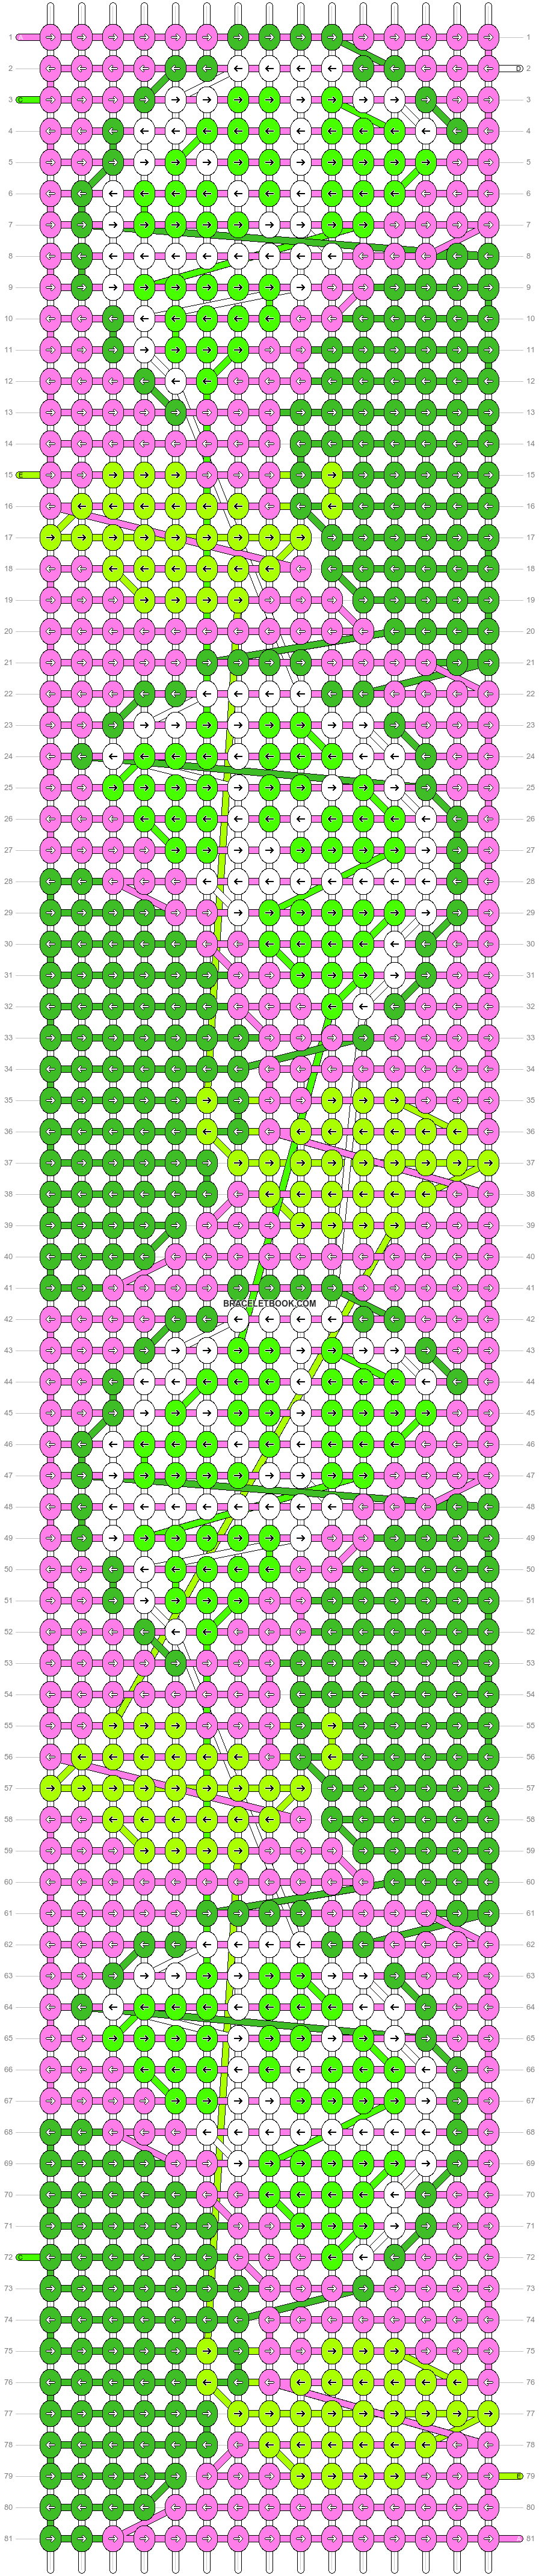 Alpha pattern #39706 variation #55578 pattern